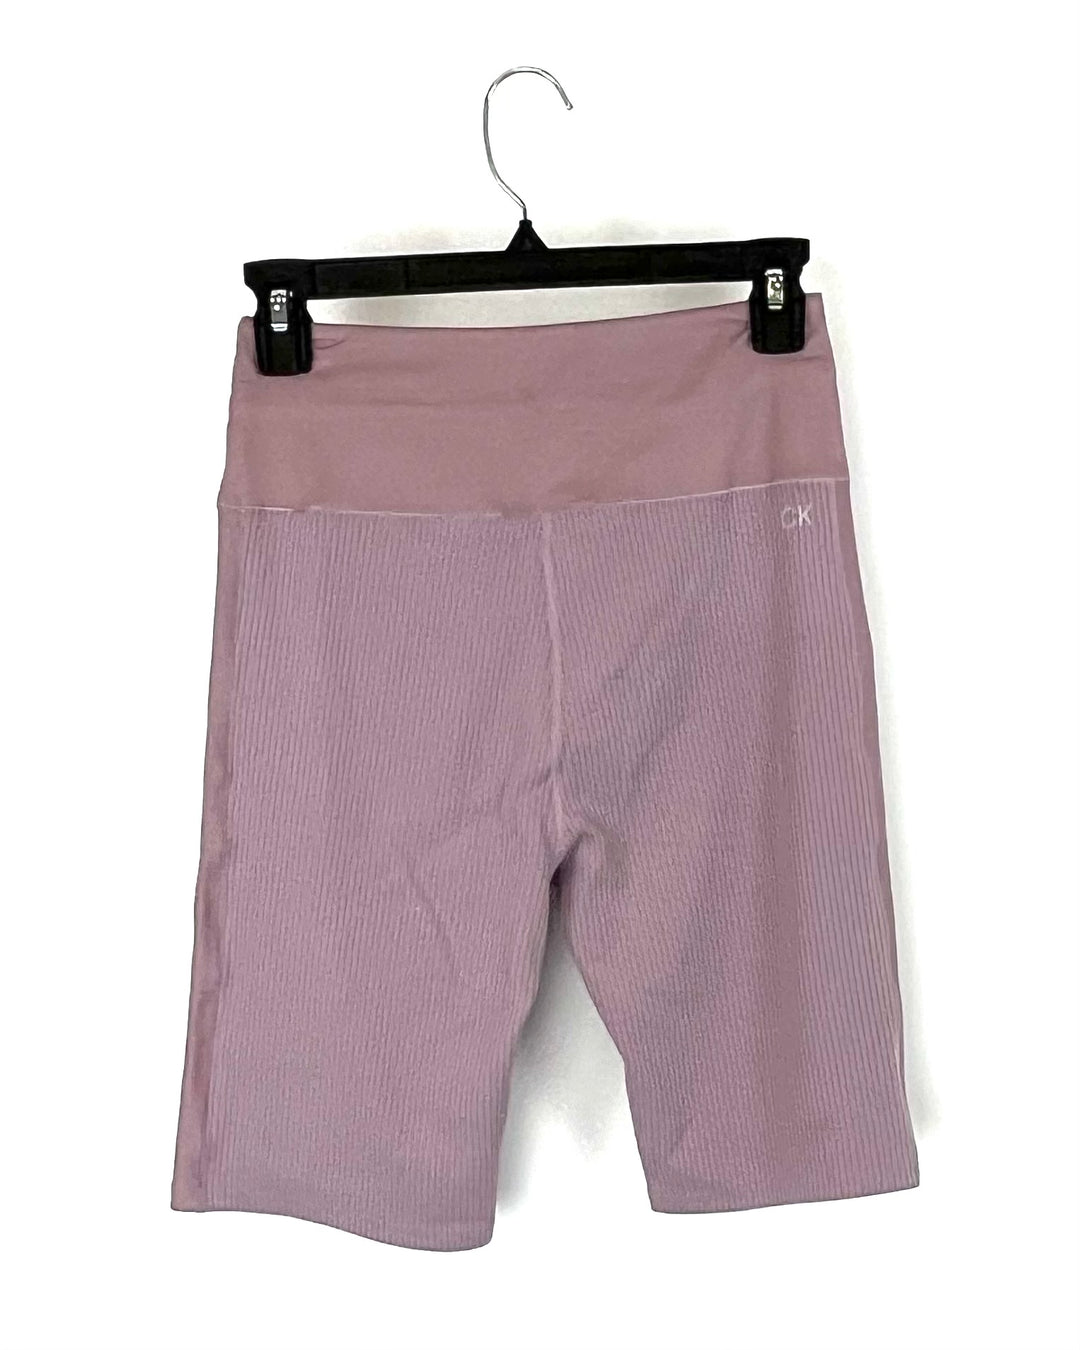 Dusty Pink Ribbed Activewear Shorts With Drawstring - Small